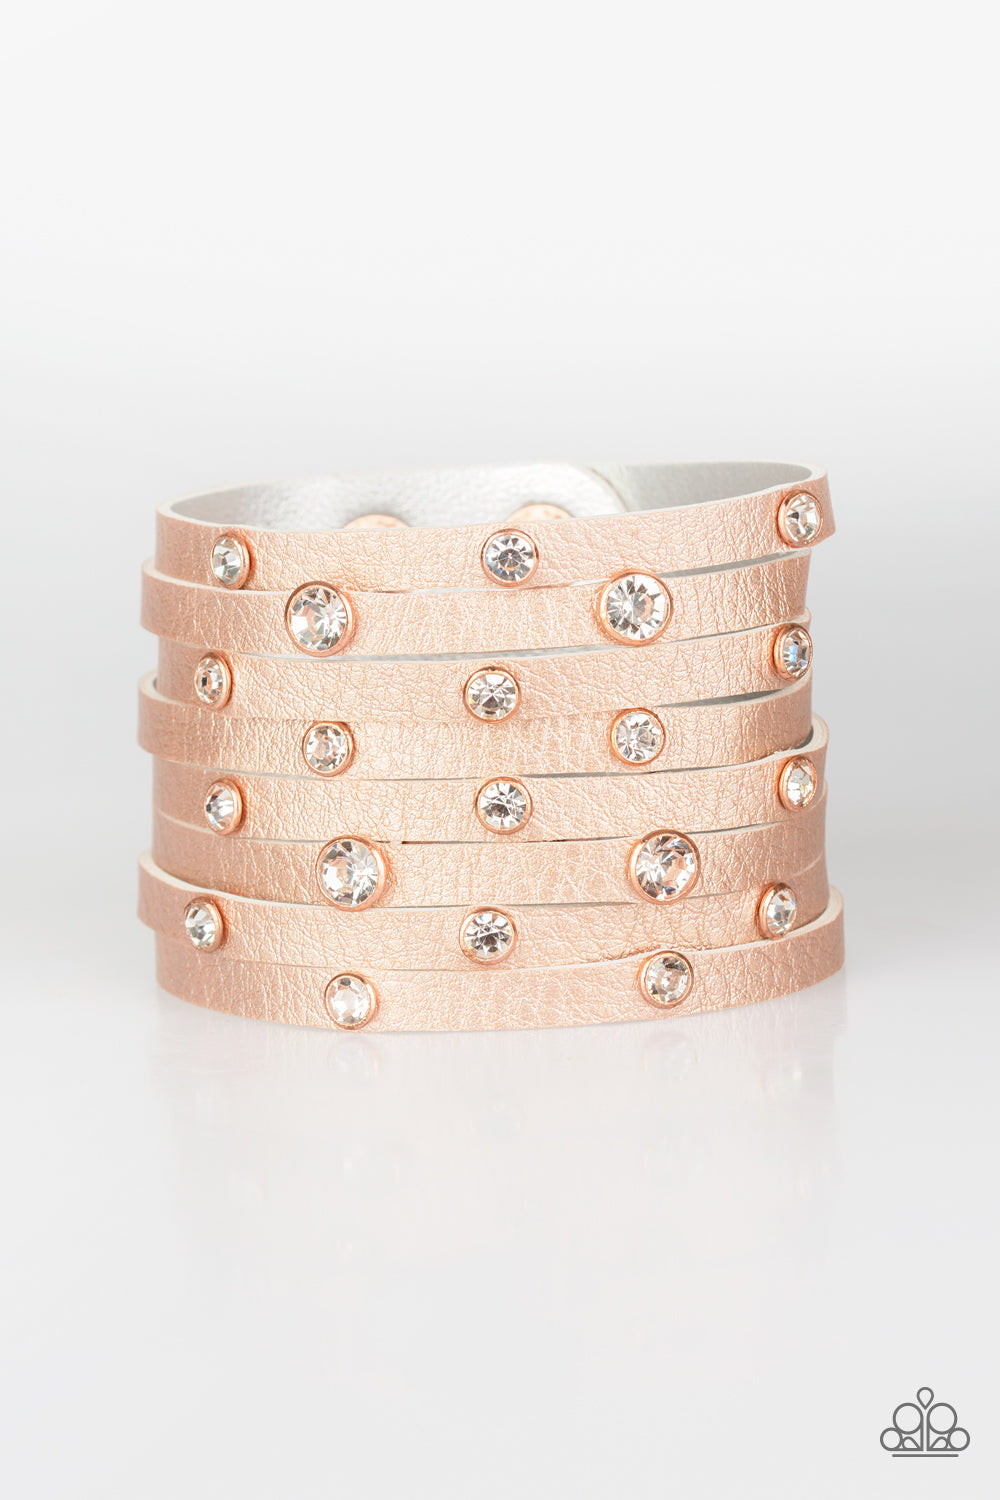 Go-Getter Glamorous Copper Paparazzi Bracelets Cashmere Pink Jewels - Cashmere Pink Jewels & Accessories, Cashmere Pink Jewels & Accessories - Paparazzi